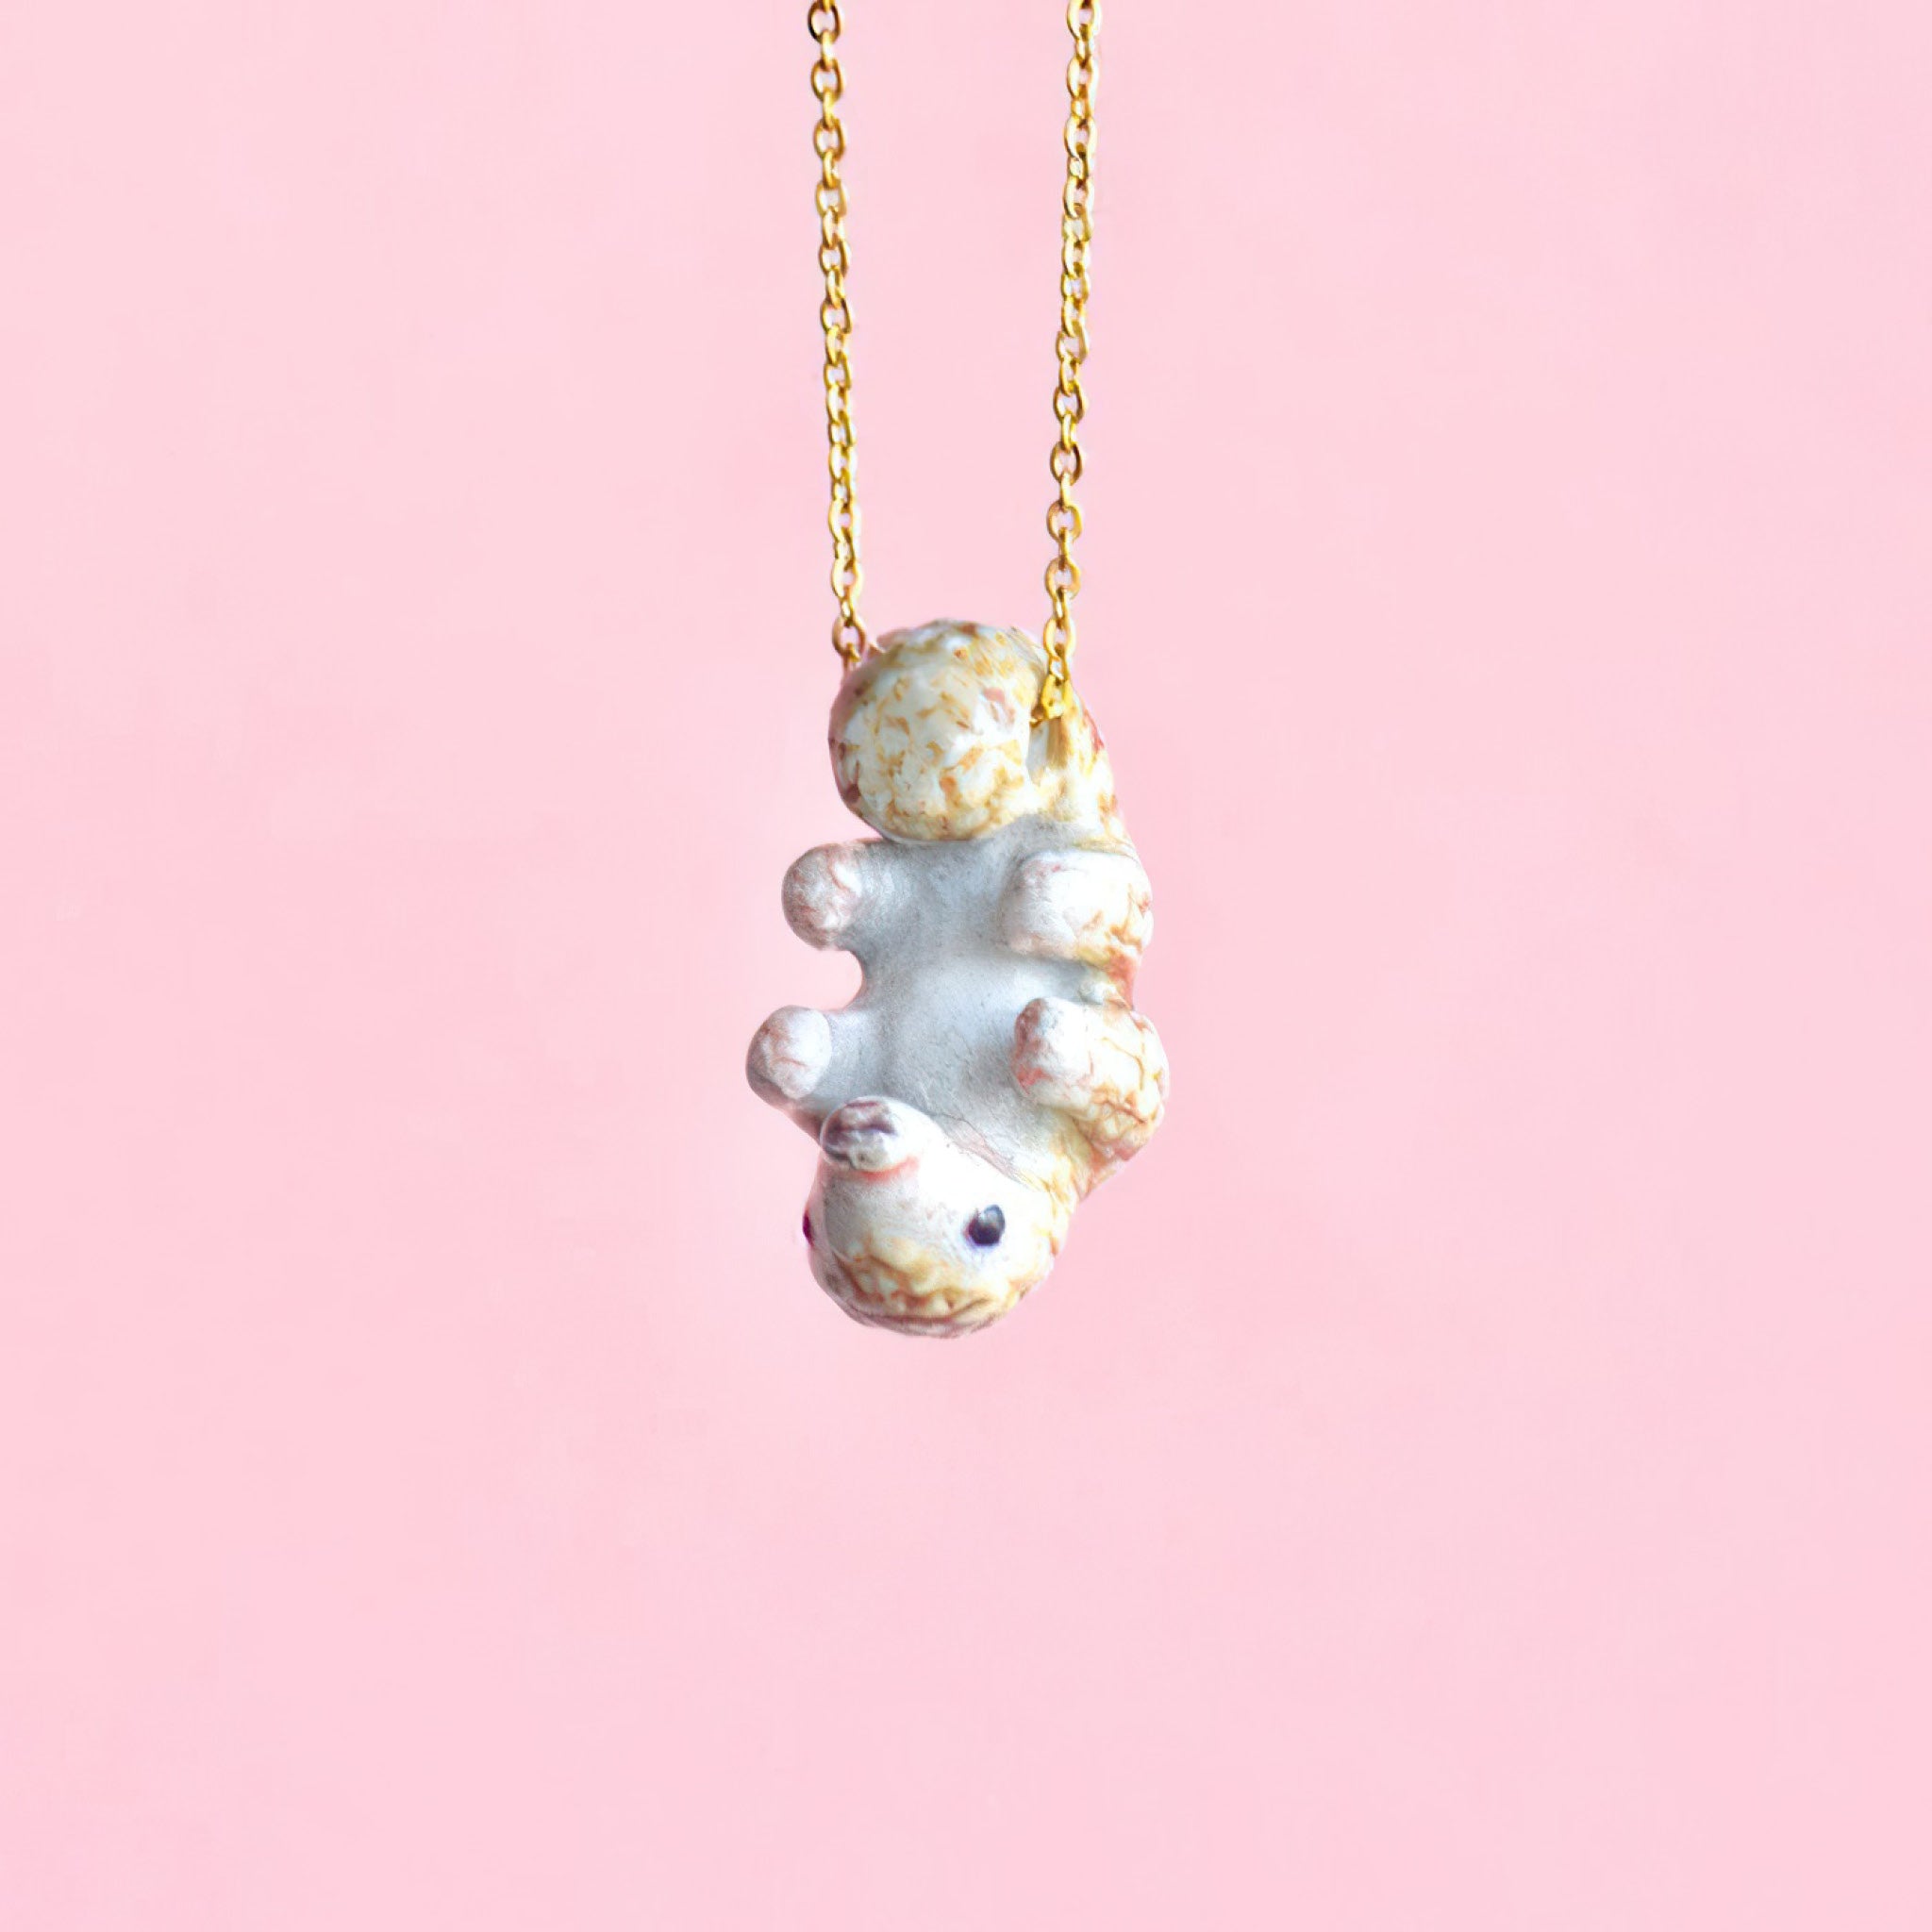 Pangolin Necklace | Camp Hollow Ceramic Animal Jewelry